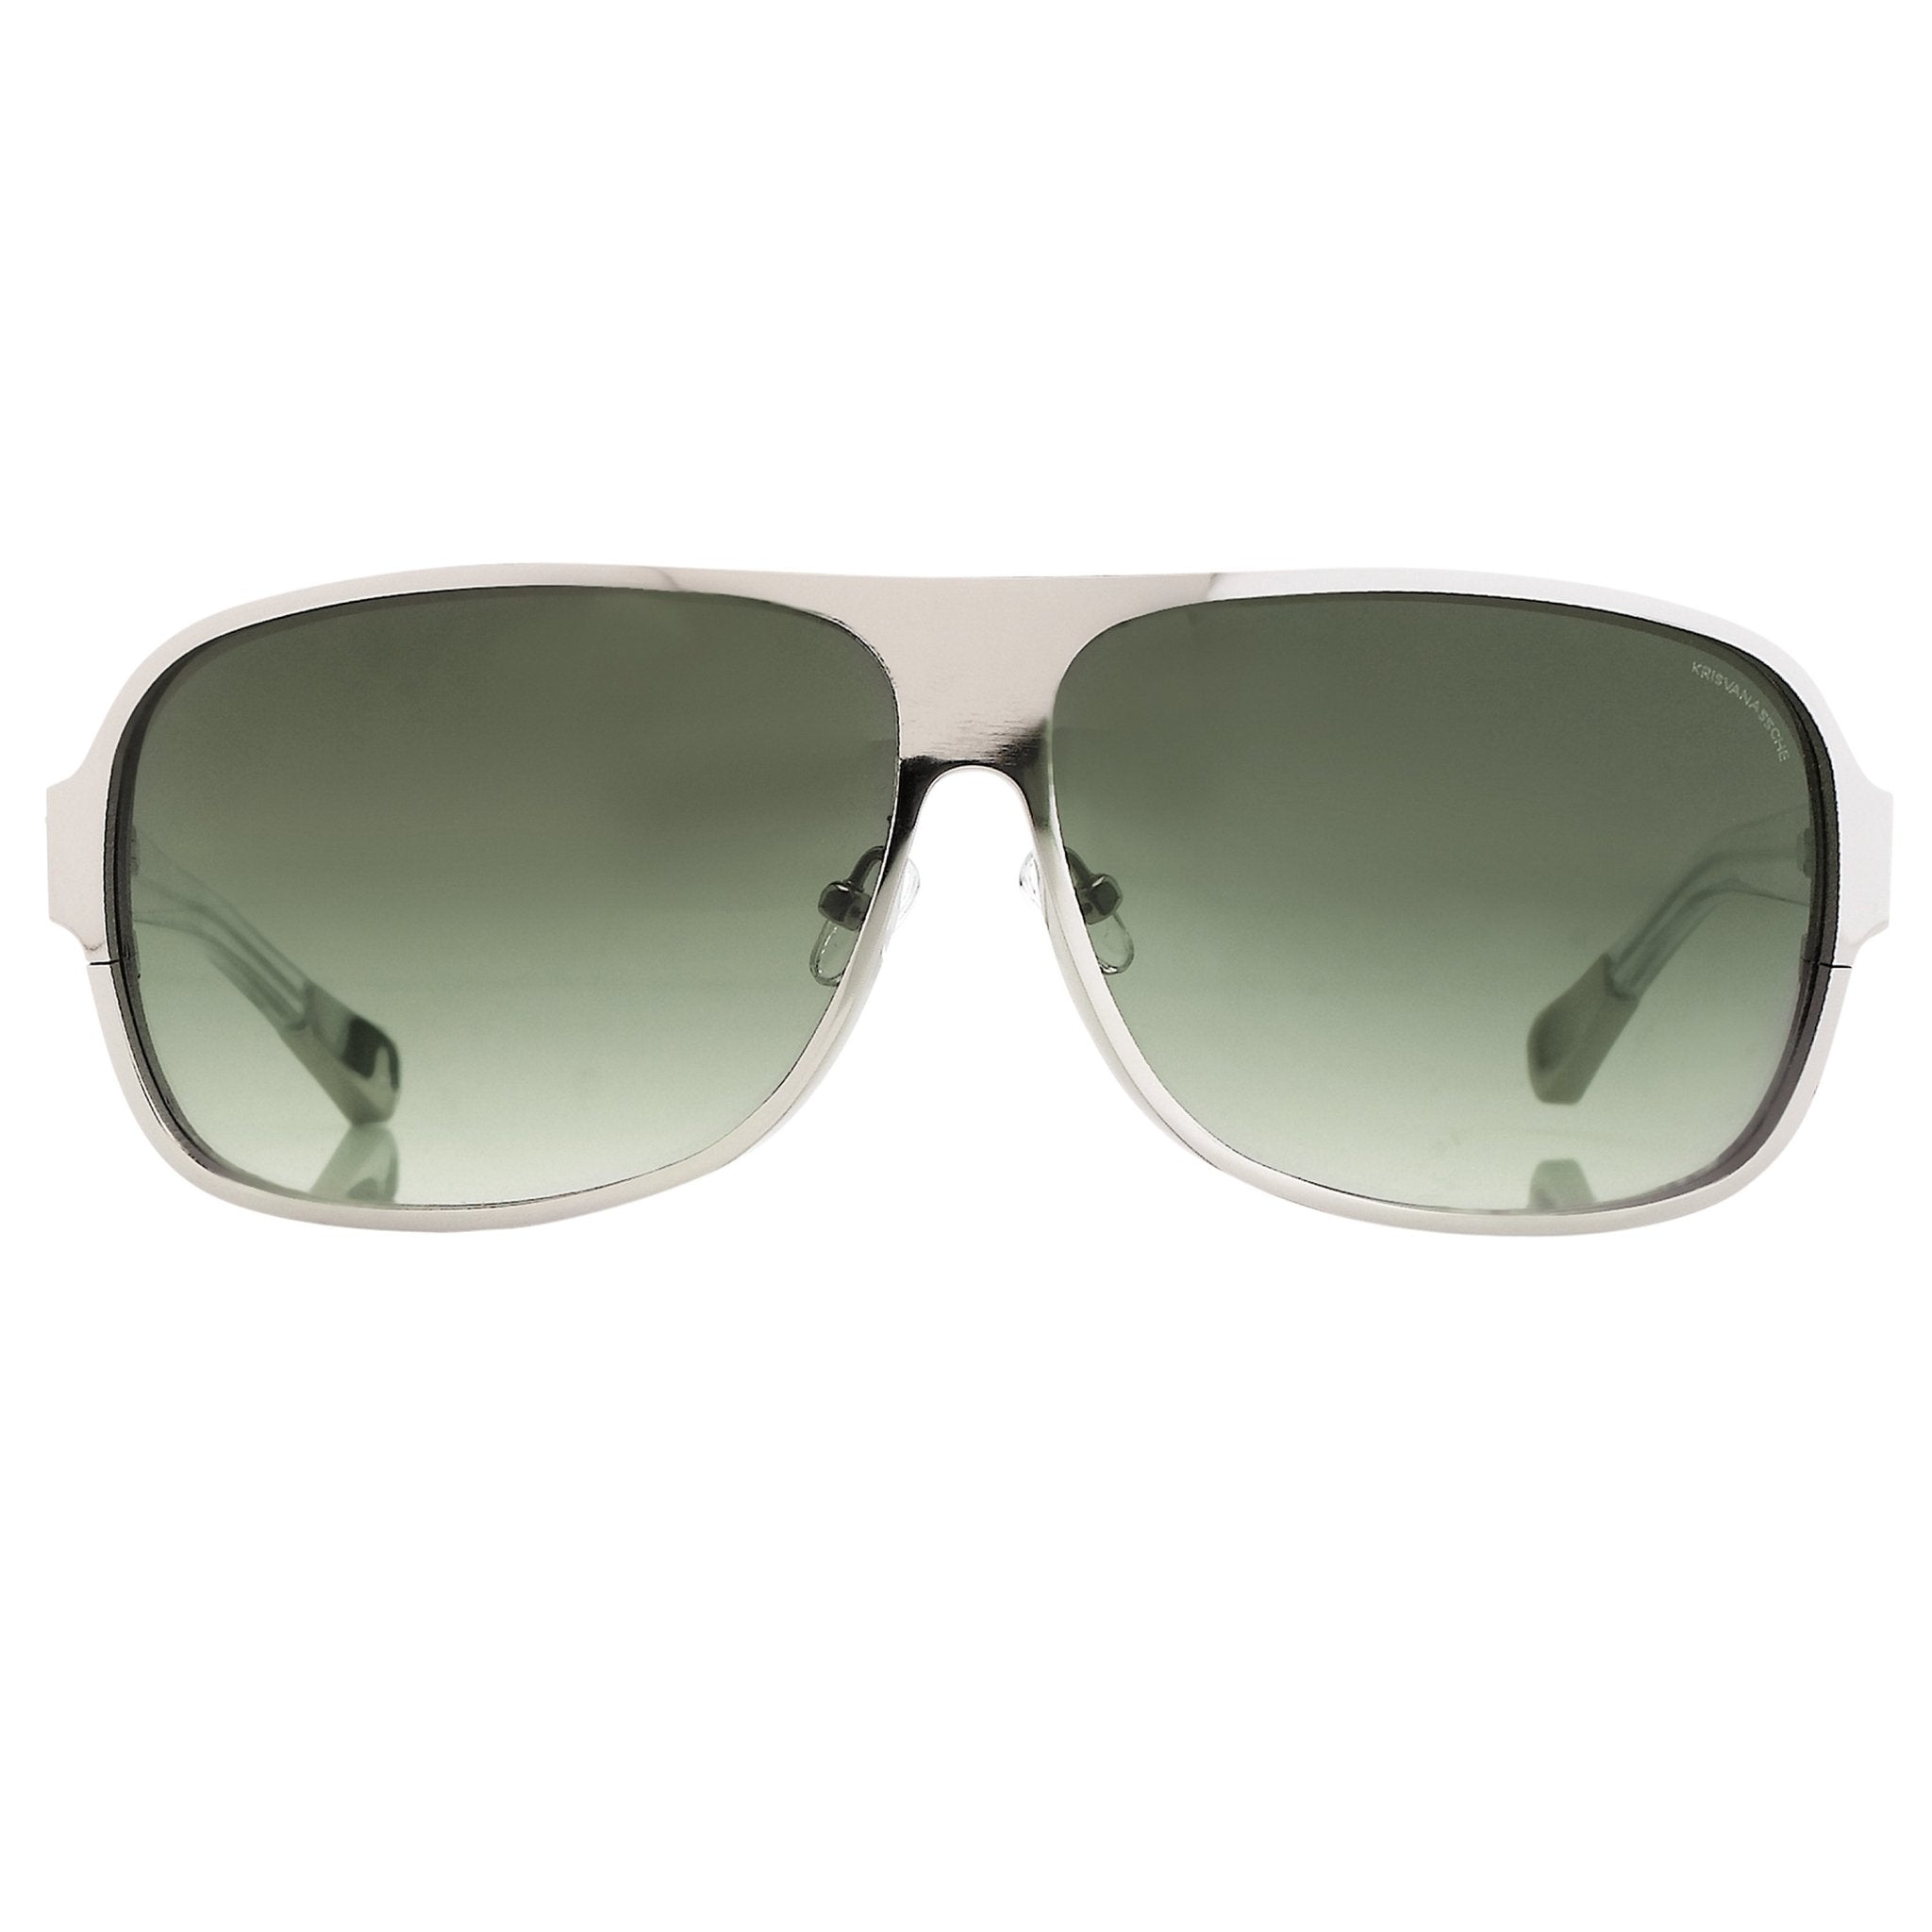 Kris Van Assche Sunglasses With Rectangular Silver Metal and Green Graduated Lenses - KVA6C4SUN - Watches & Crystals